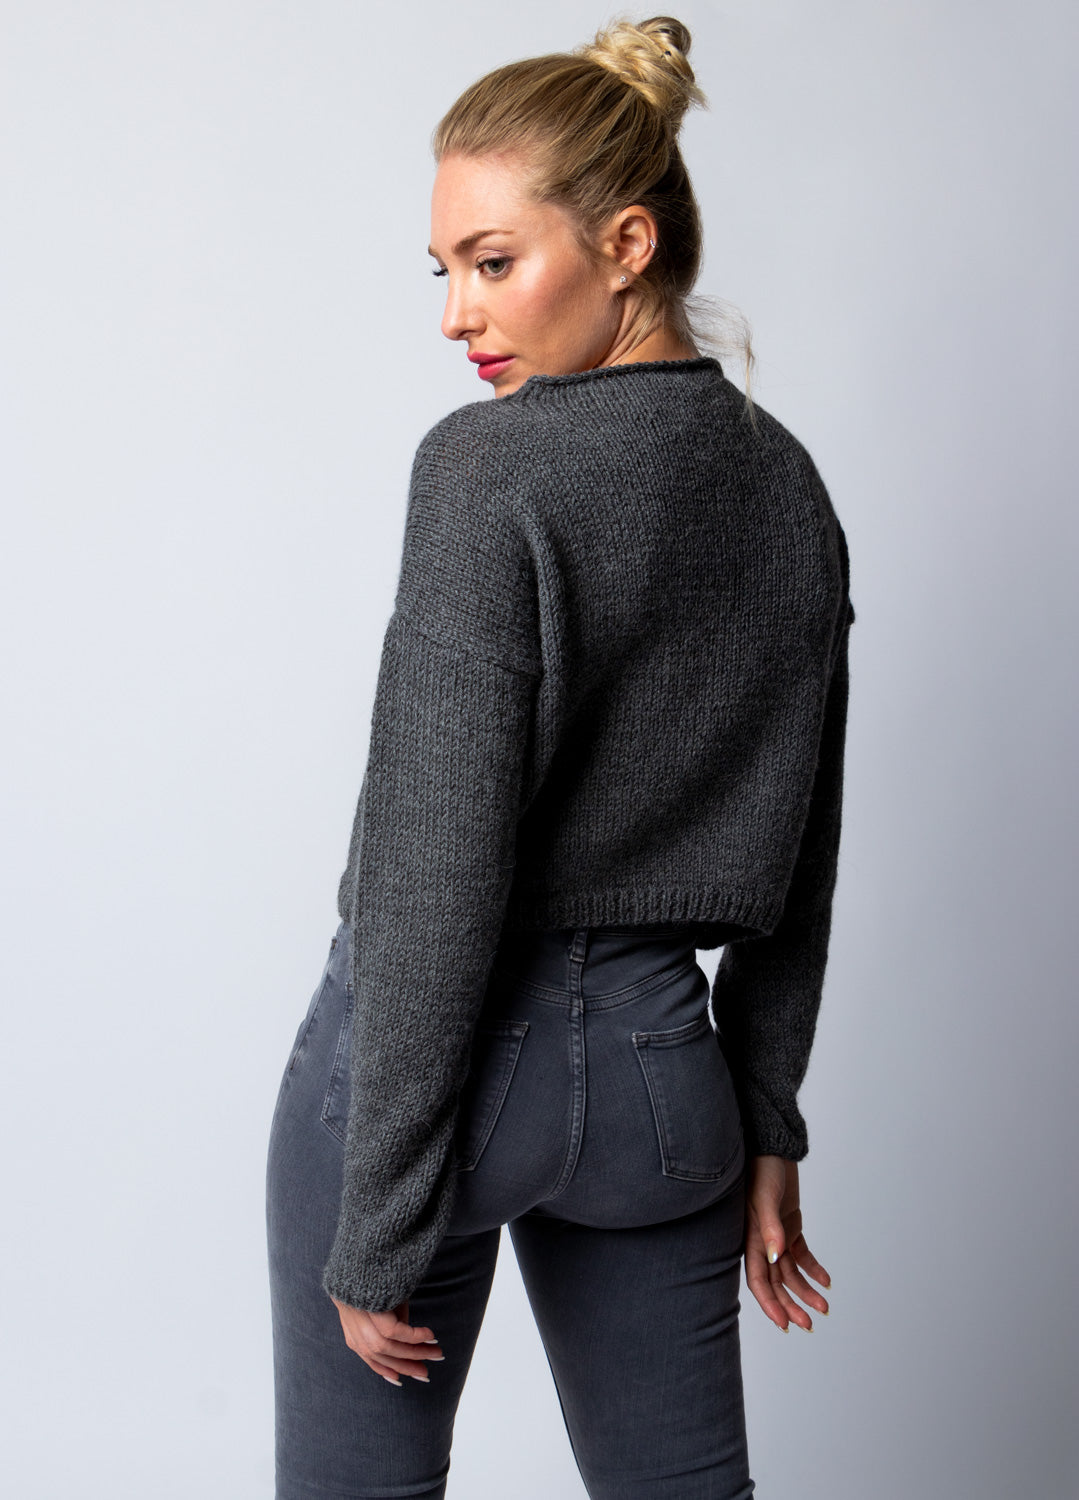 Haptic Sweater Kit